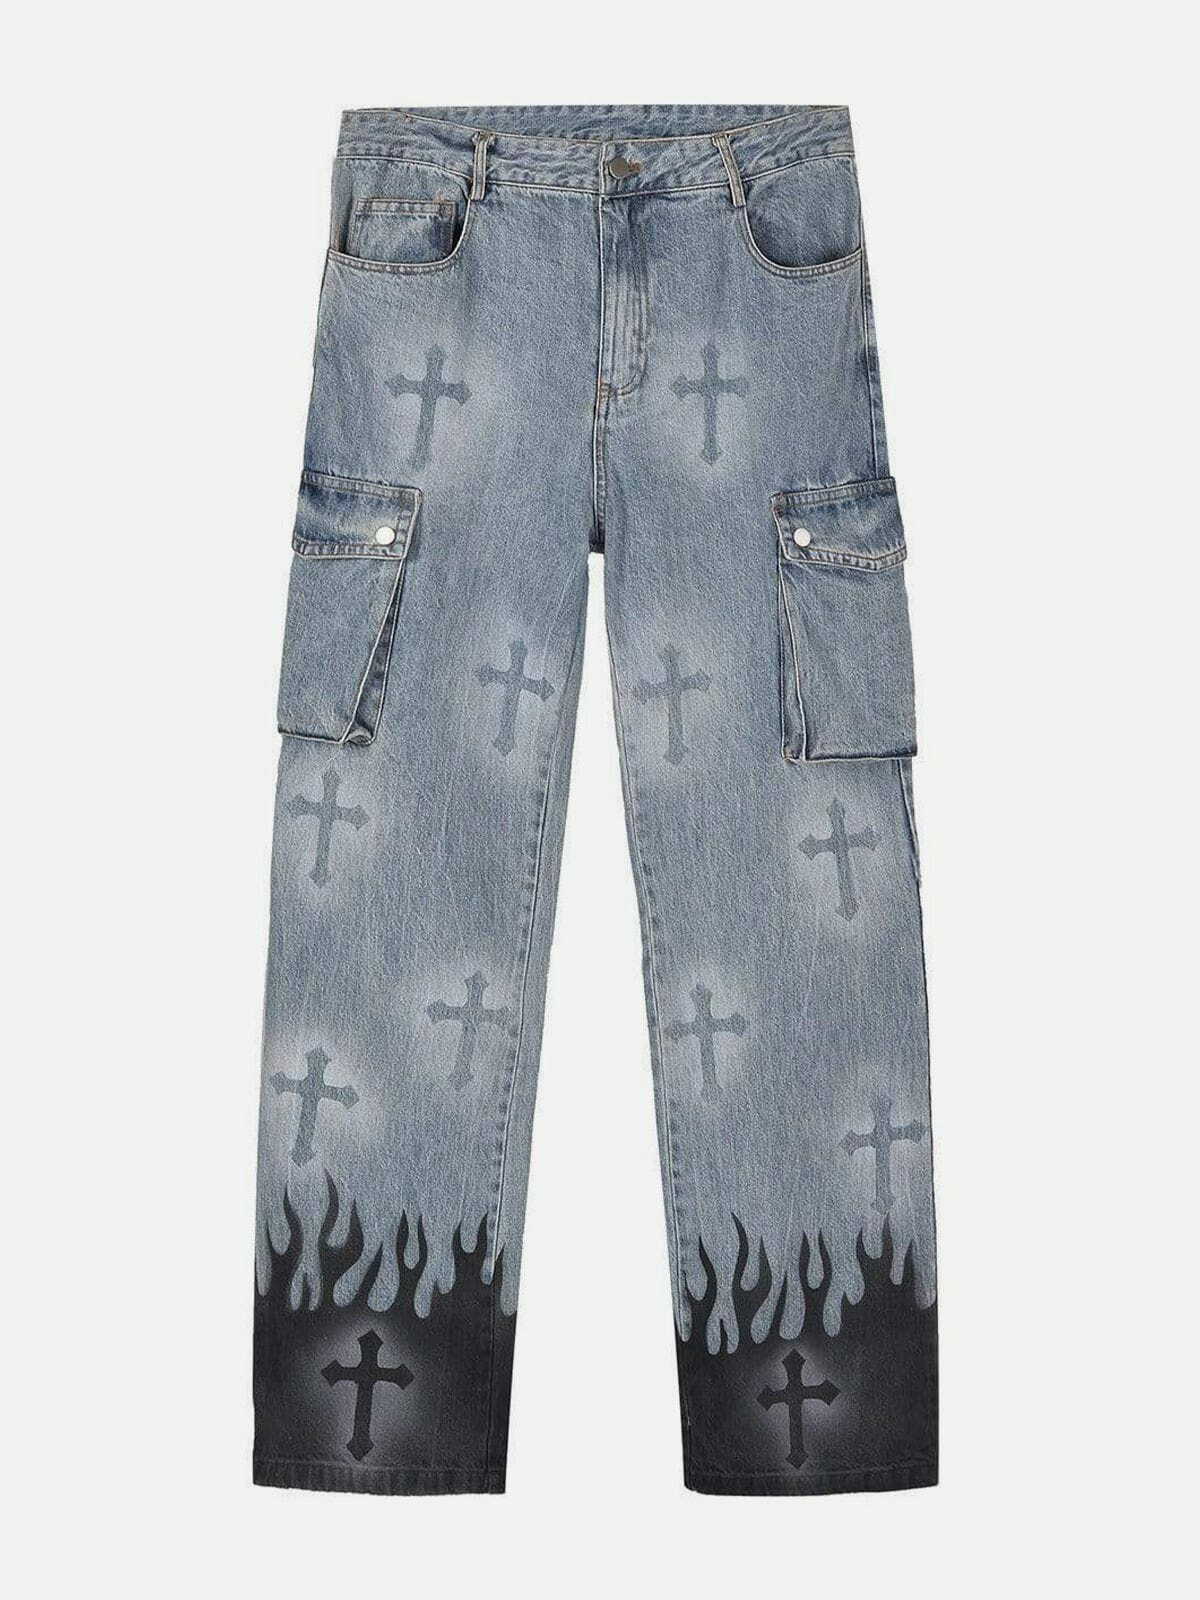 cross vibe lowrise jeans edgy & retro streetwear 4913